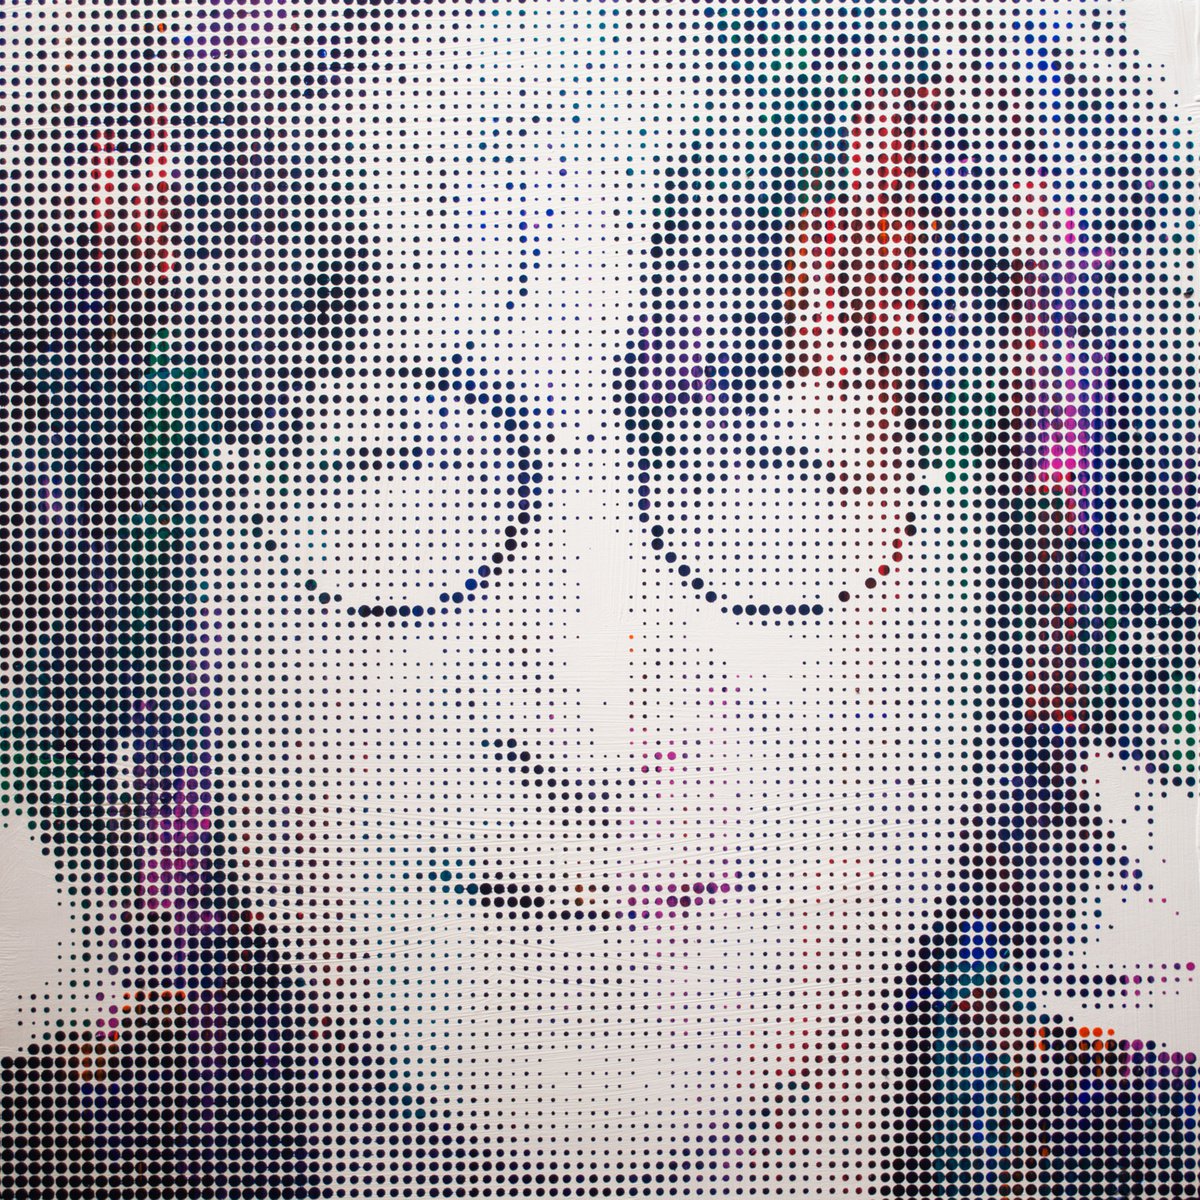 J. Lennon IV by Sean Christopher Ward